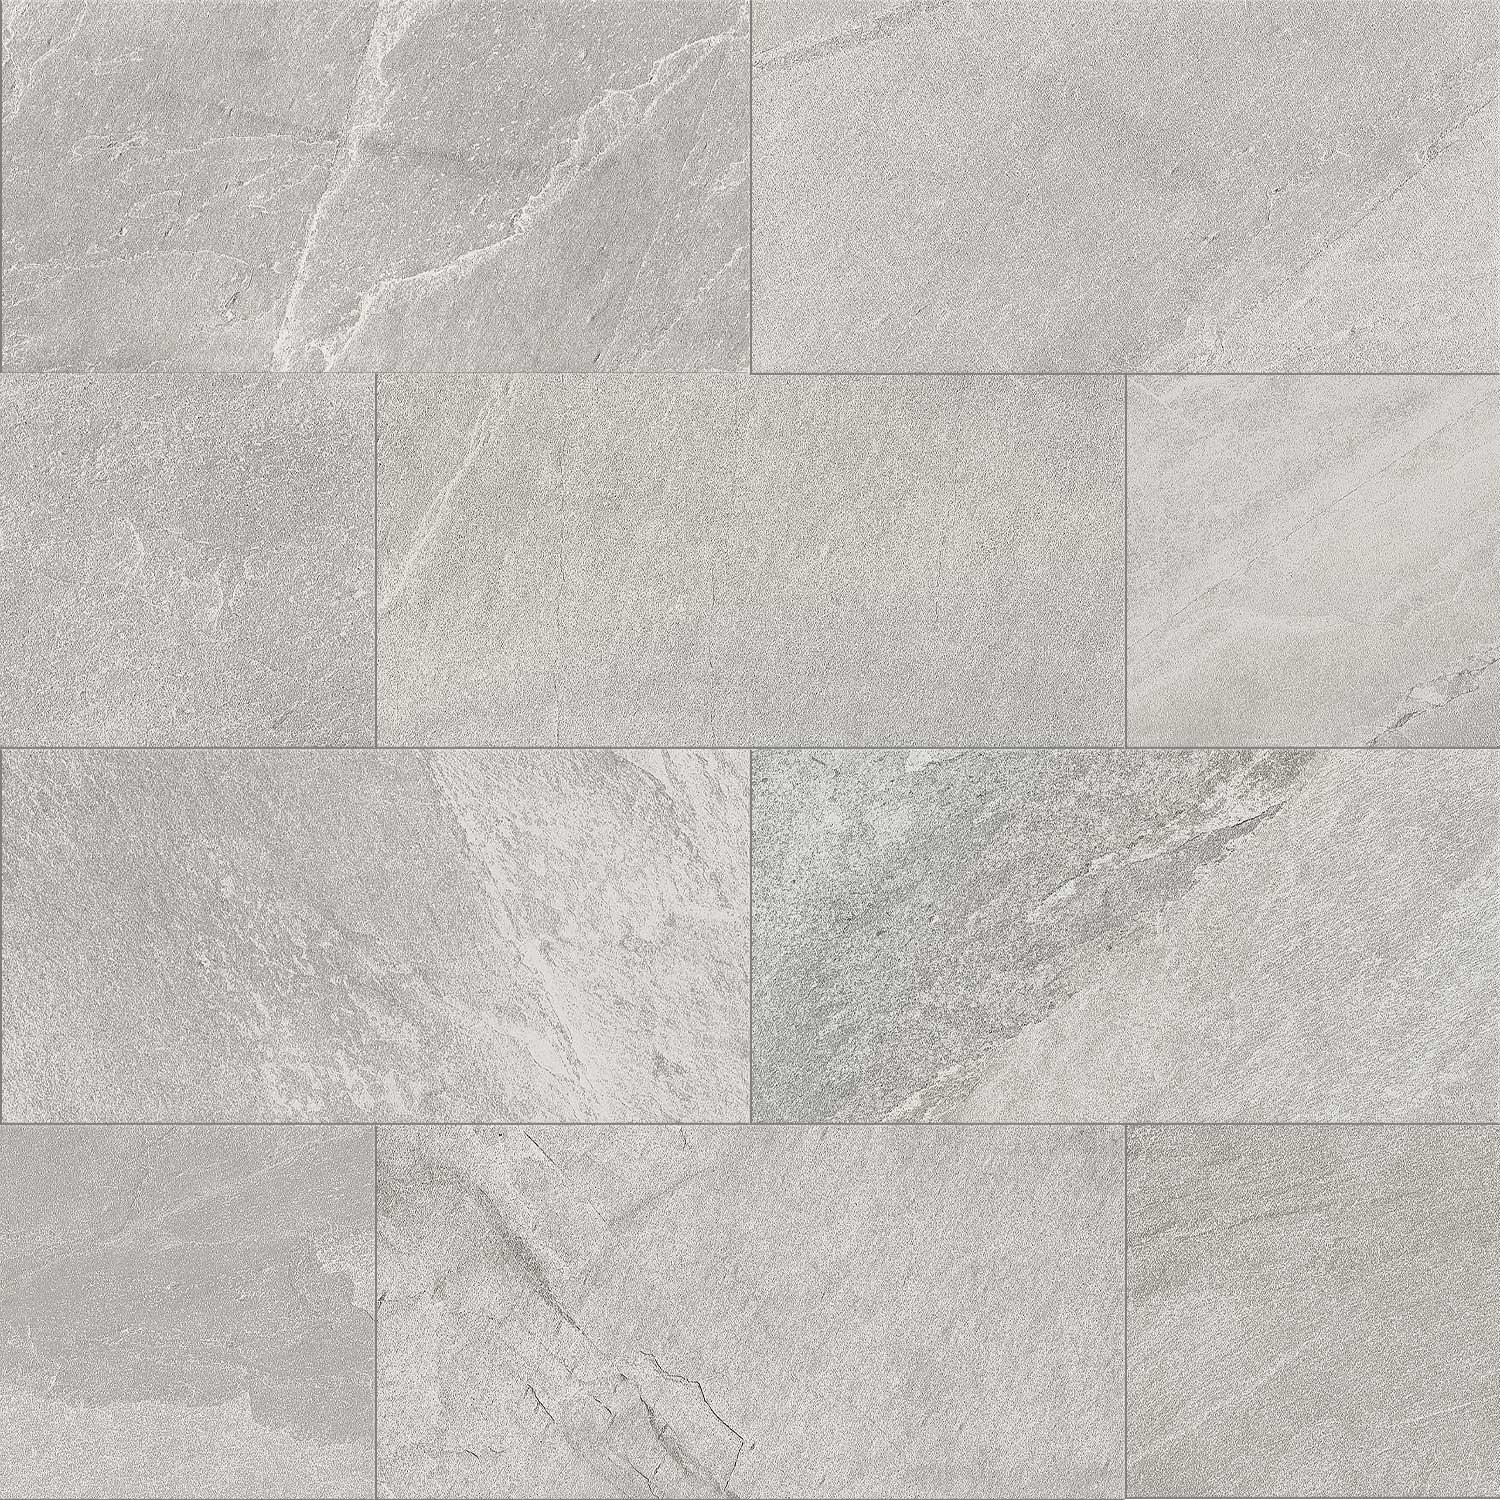 Rushmore White Porcelain Tile Stone Effect Walls Floors 300x600mm